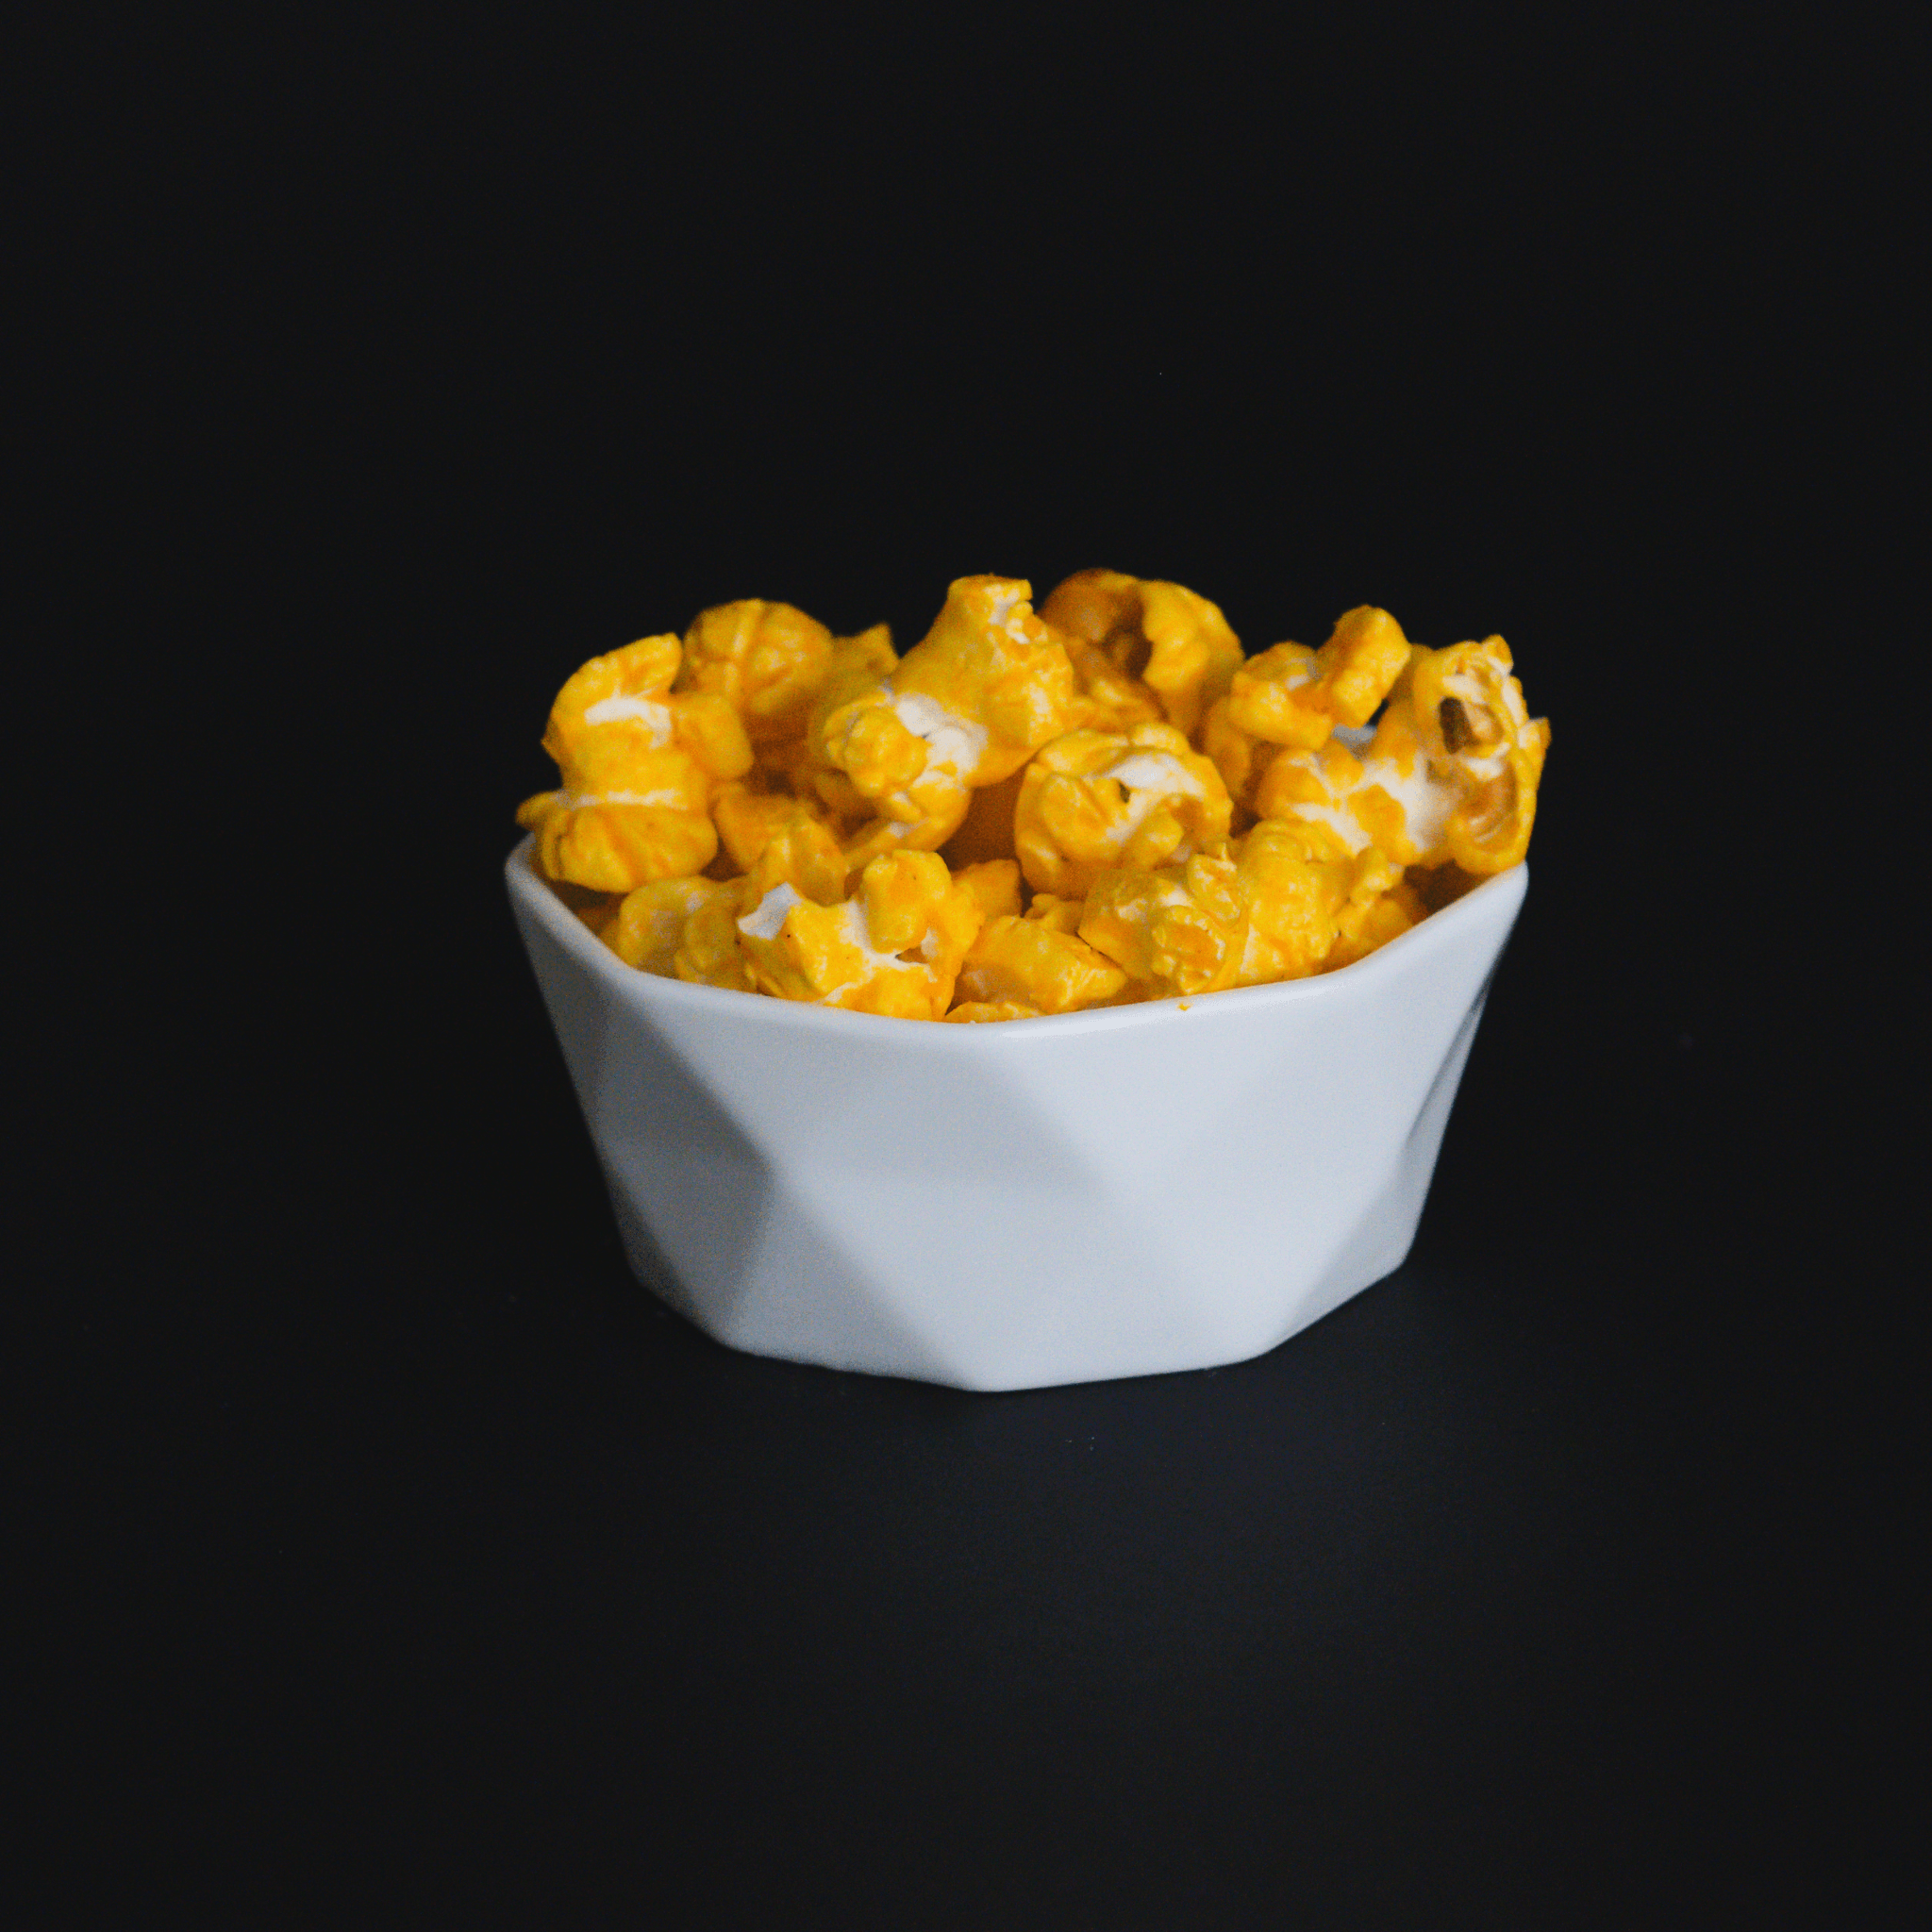 Cheddar Cheese Popcorn